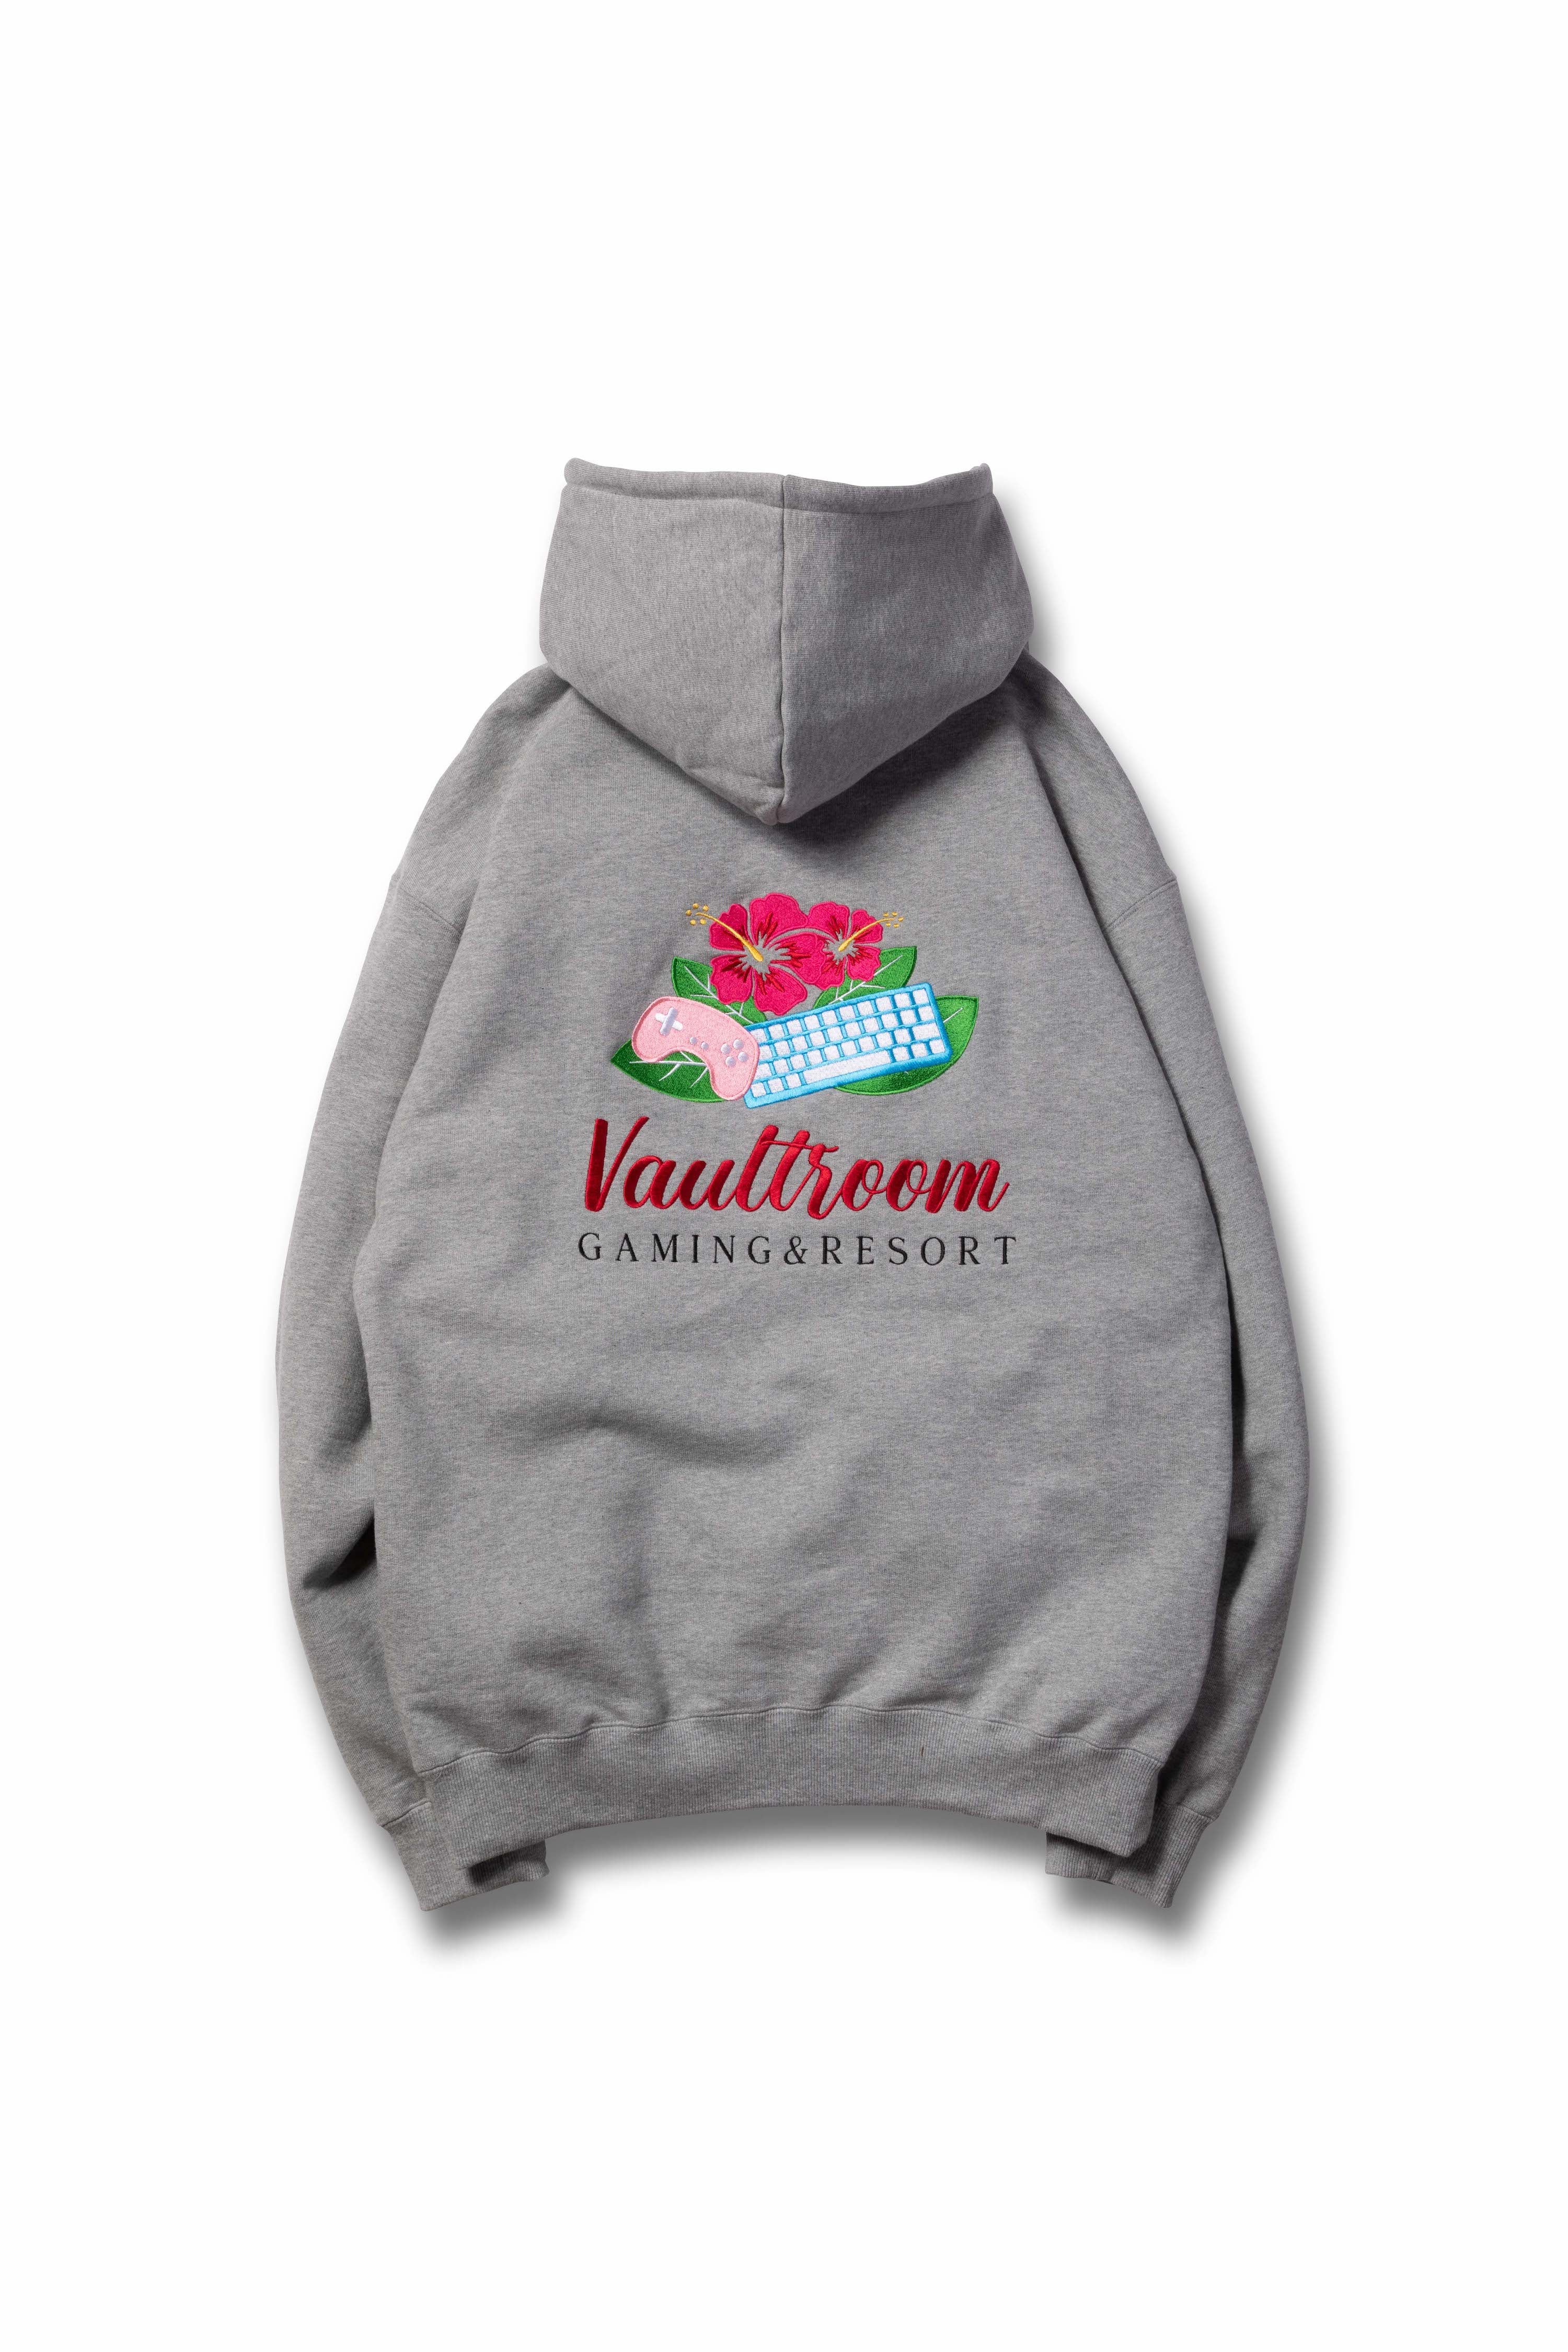 vaultroom × Selly Hoodie 黒 パーカー Lサイズ - トップス